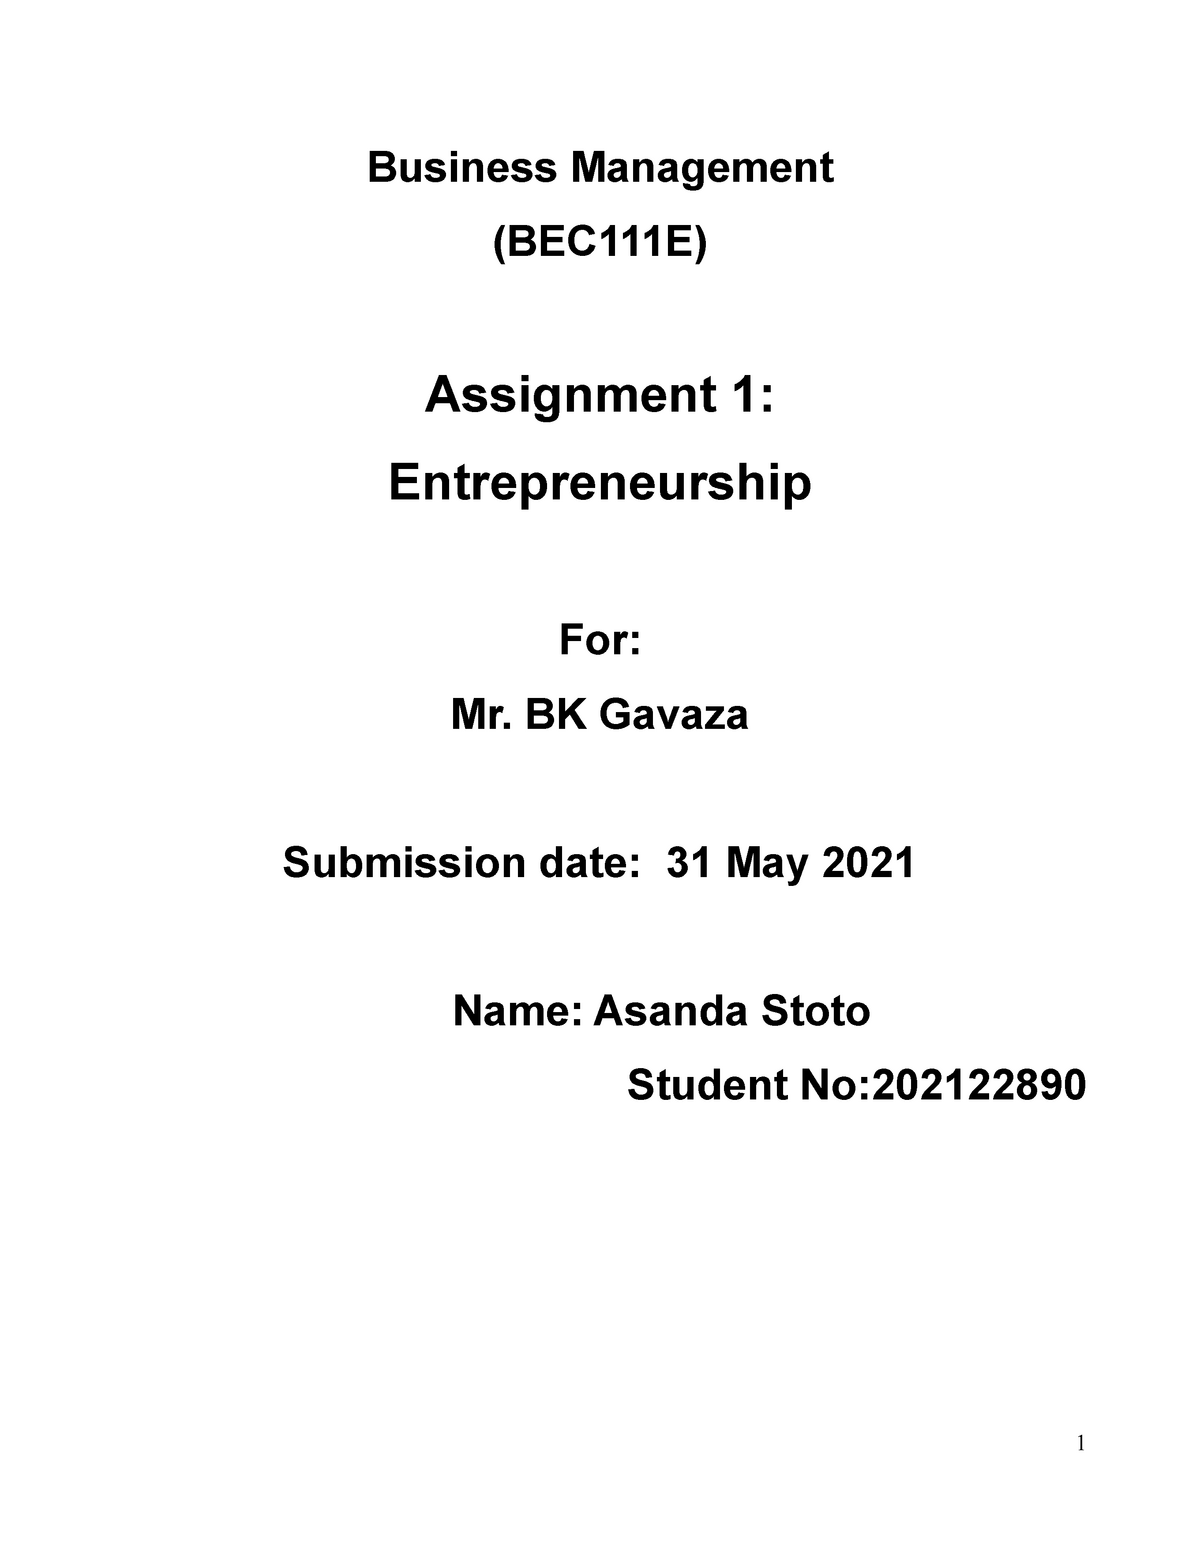 contoh assignment business management